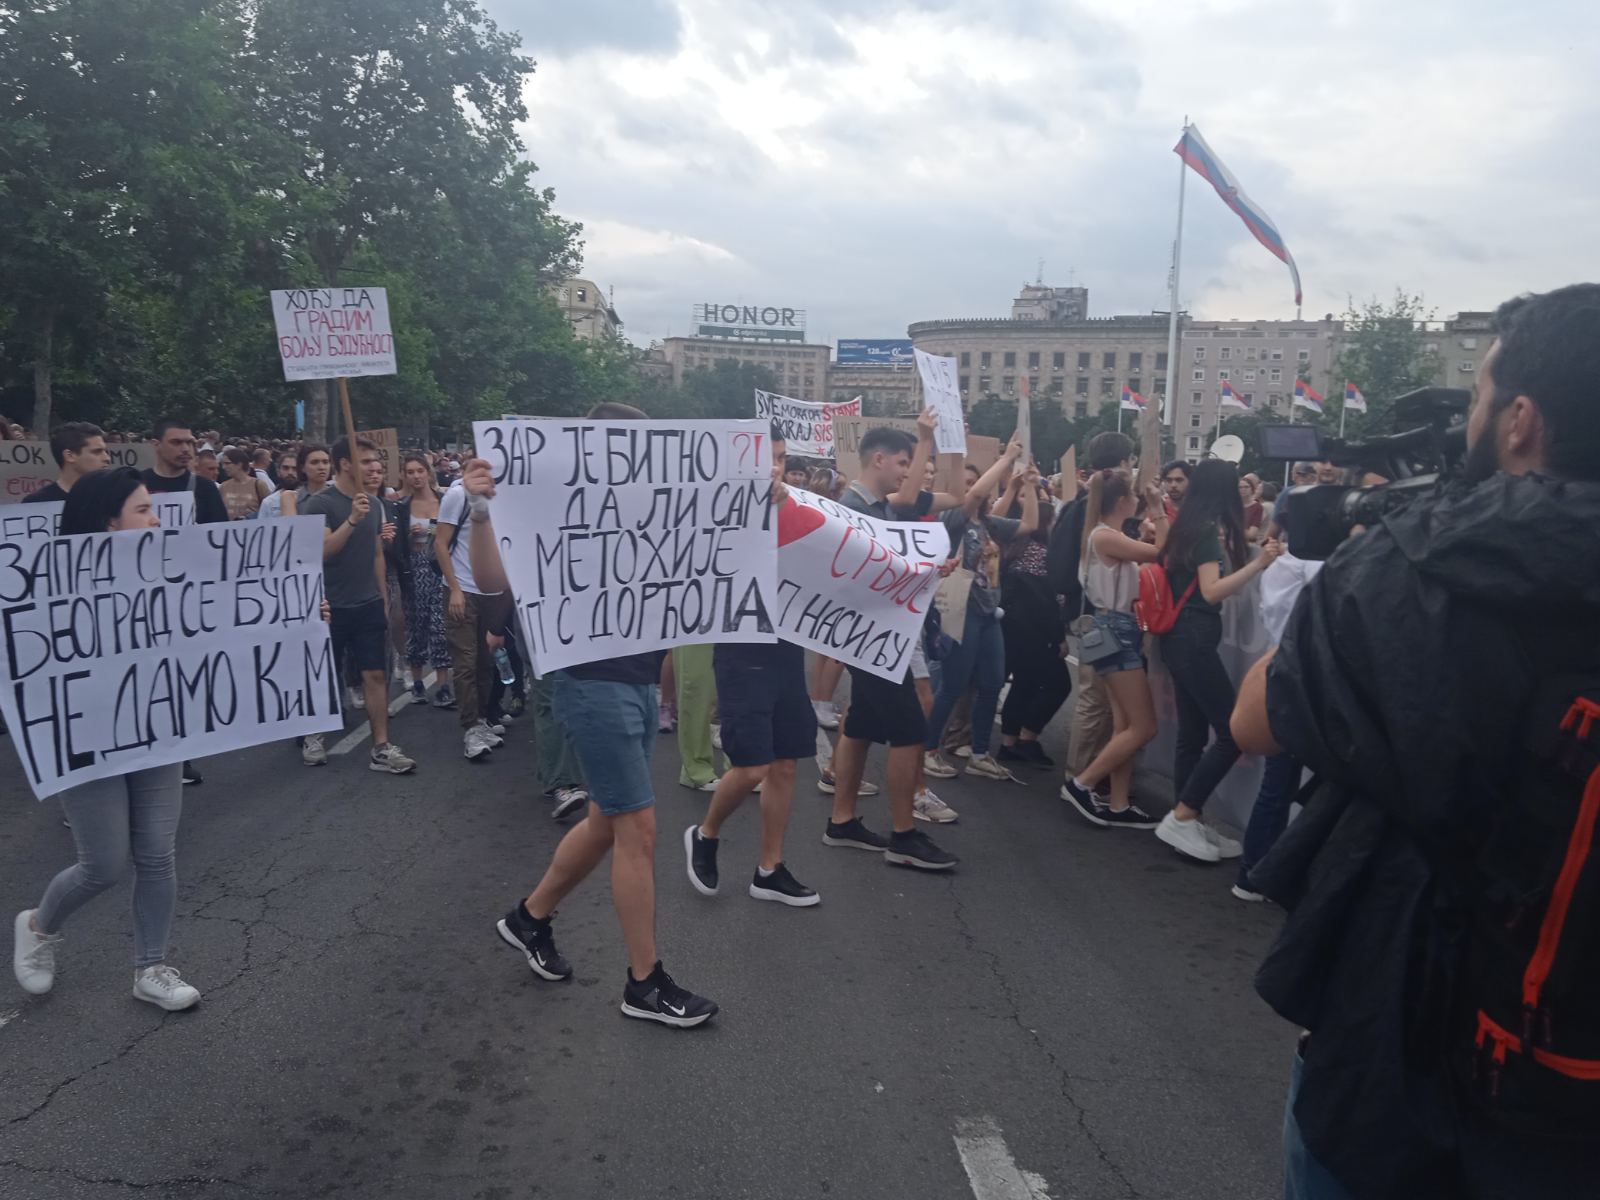 "Zar je bitno da li sam s Metohije ili s Dorćola?": Osmi protest "Srbija protiv nasilja" u slikama (FOTO) 23